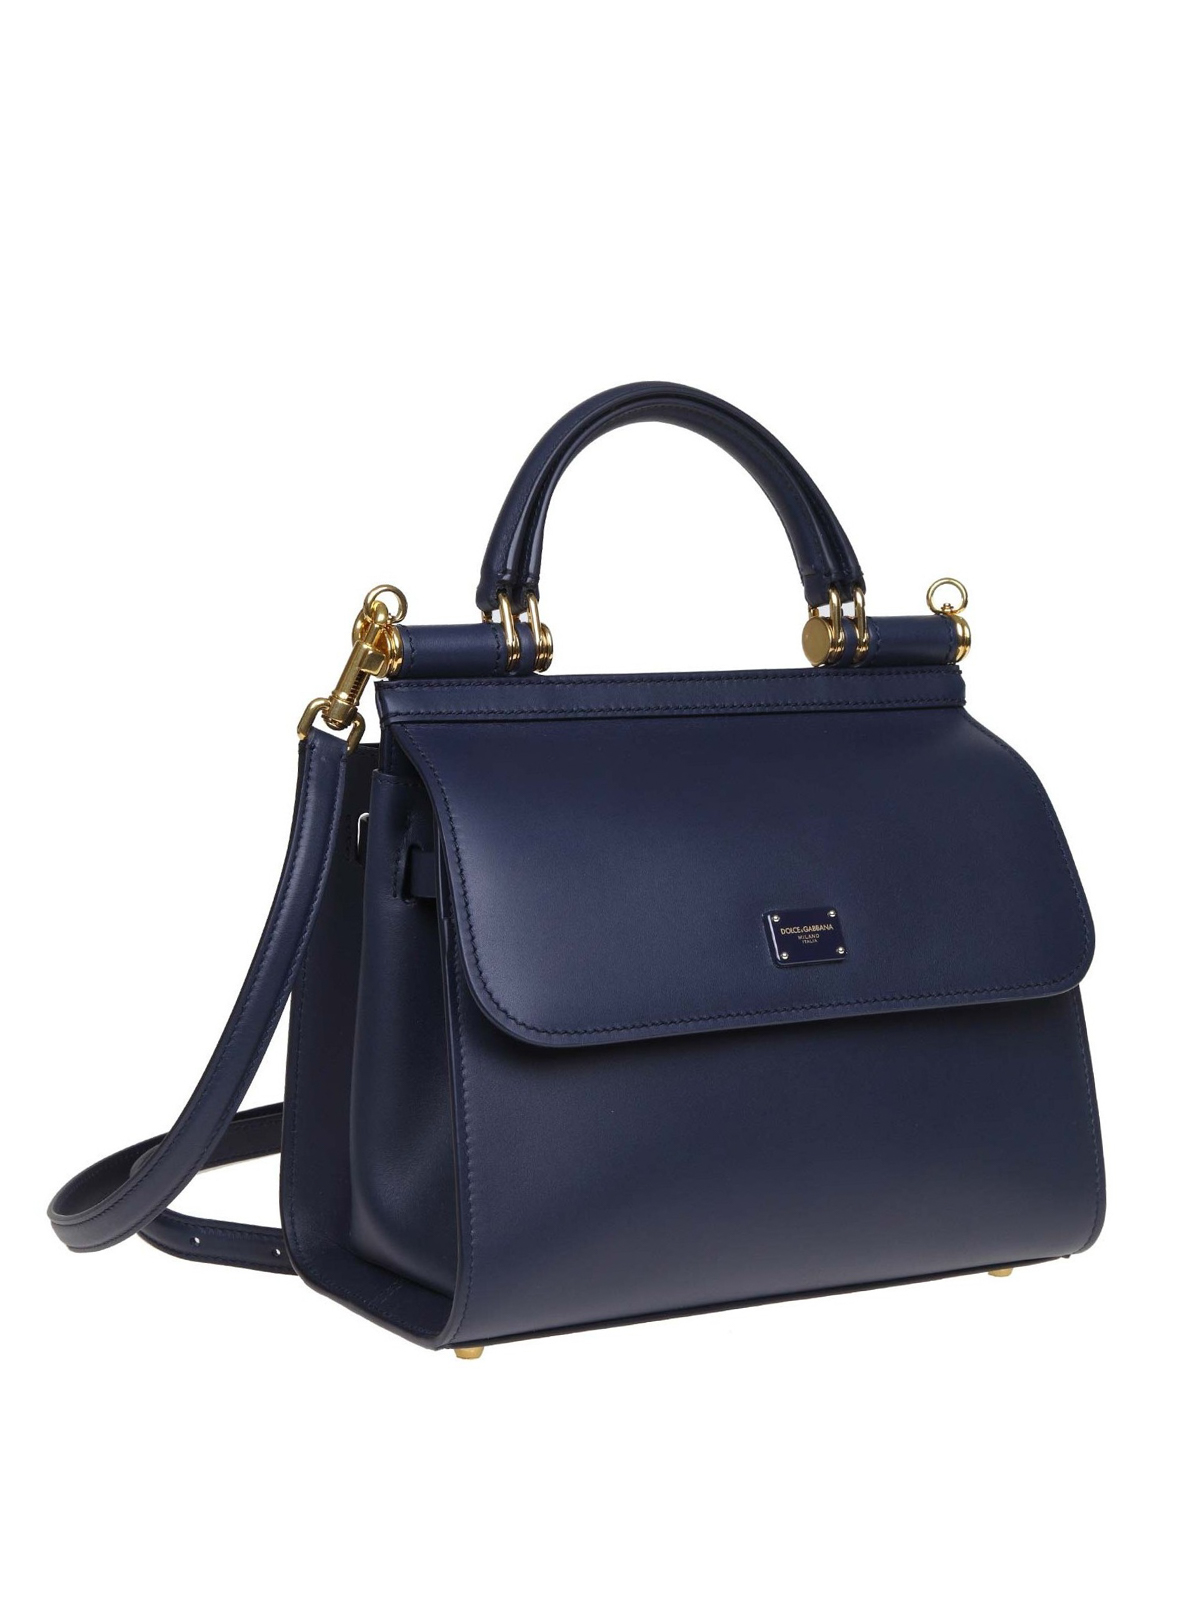 Bowling bags Dolce & Gabbana - Sicily Love medium light blue bag -  BB6002AS50581600